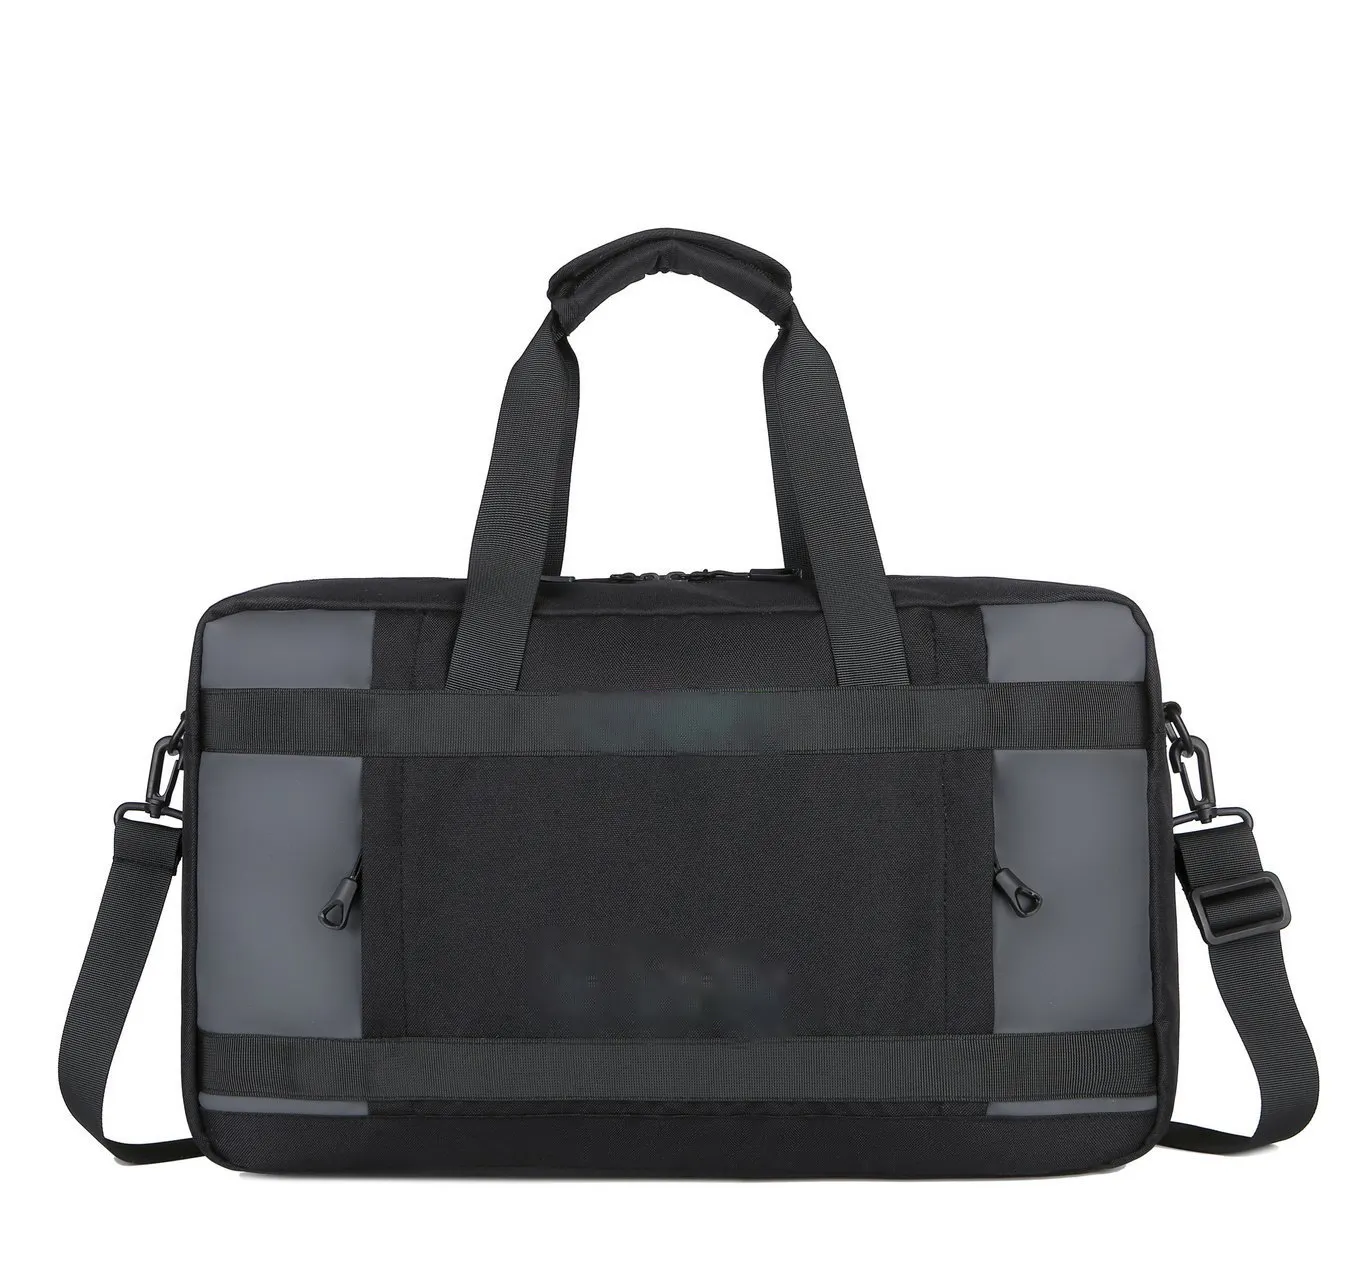 Coming innovation design custom large capacity business travel duffel bag handbag large gym travel sport bag for men women